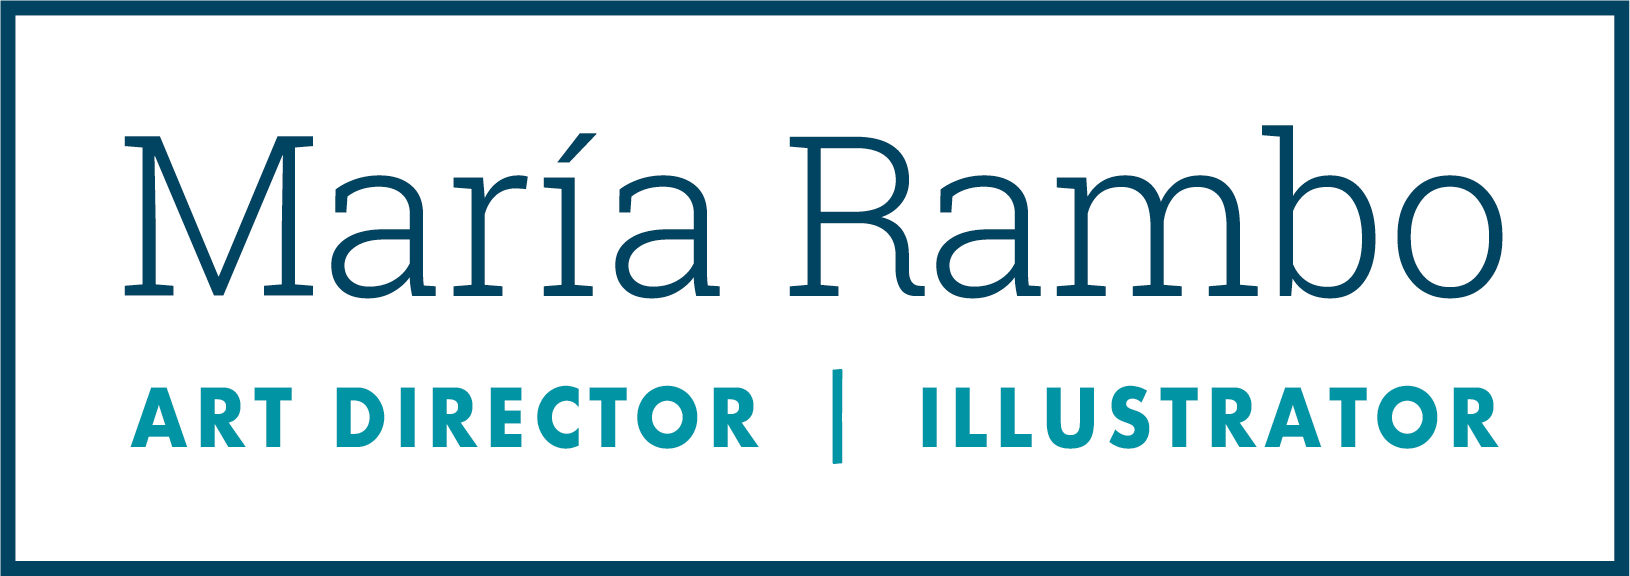 Maria Rambo site logo